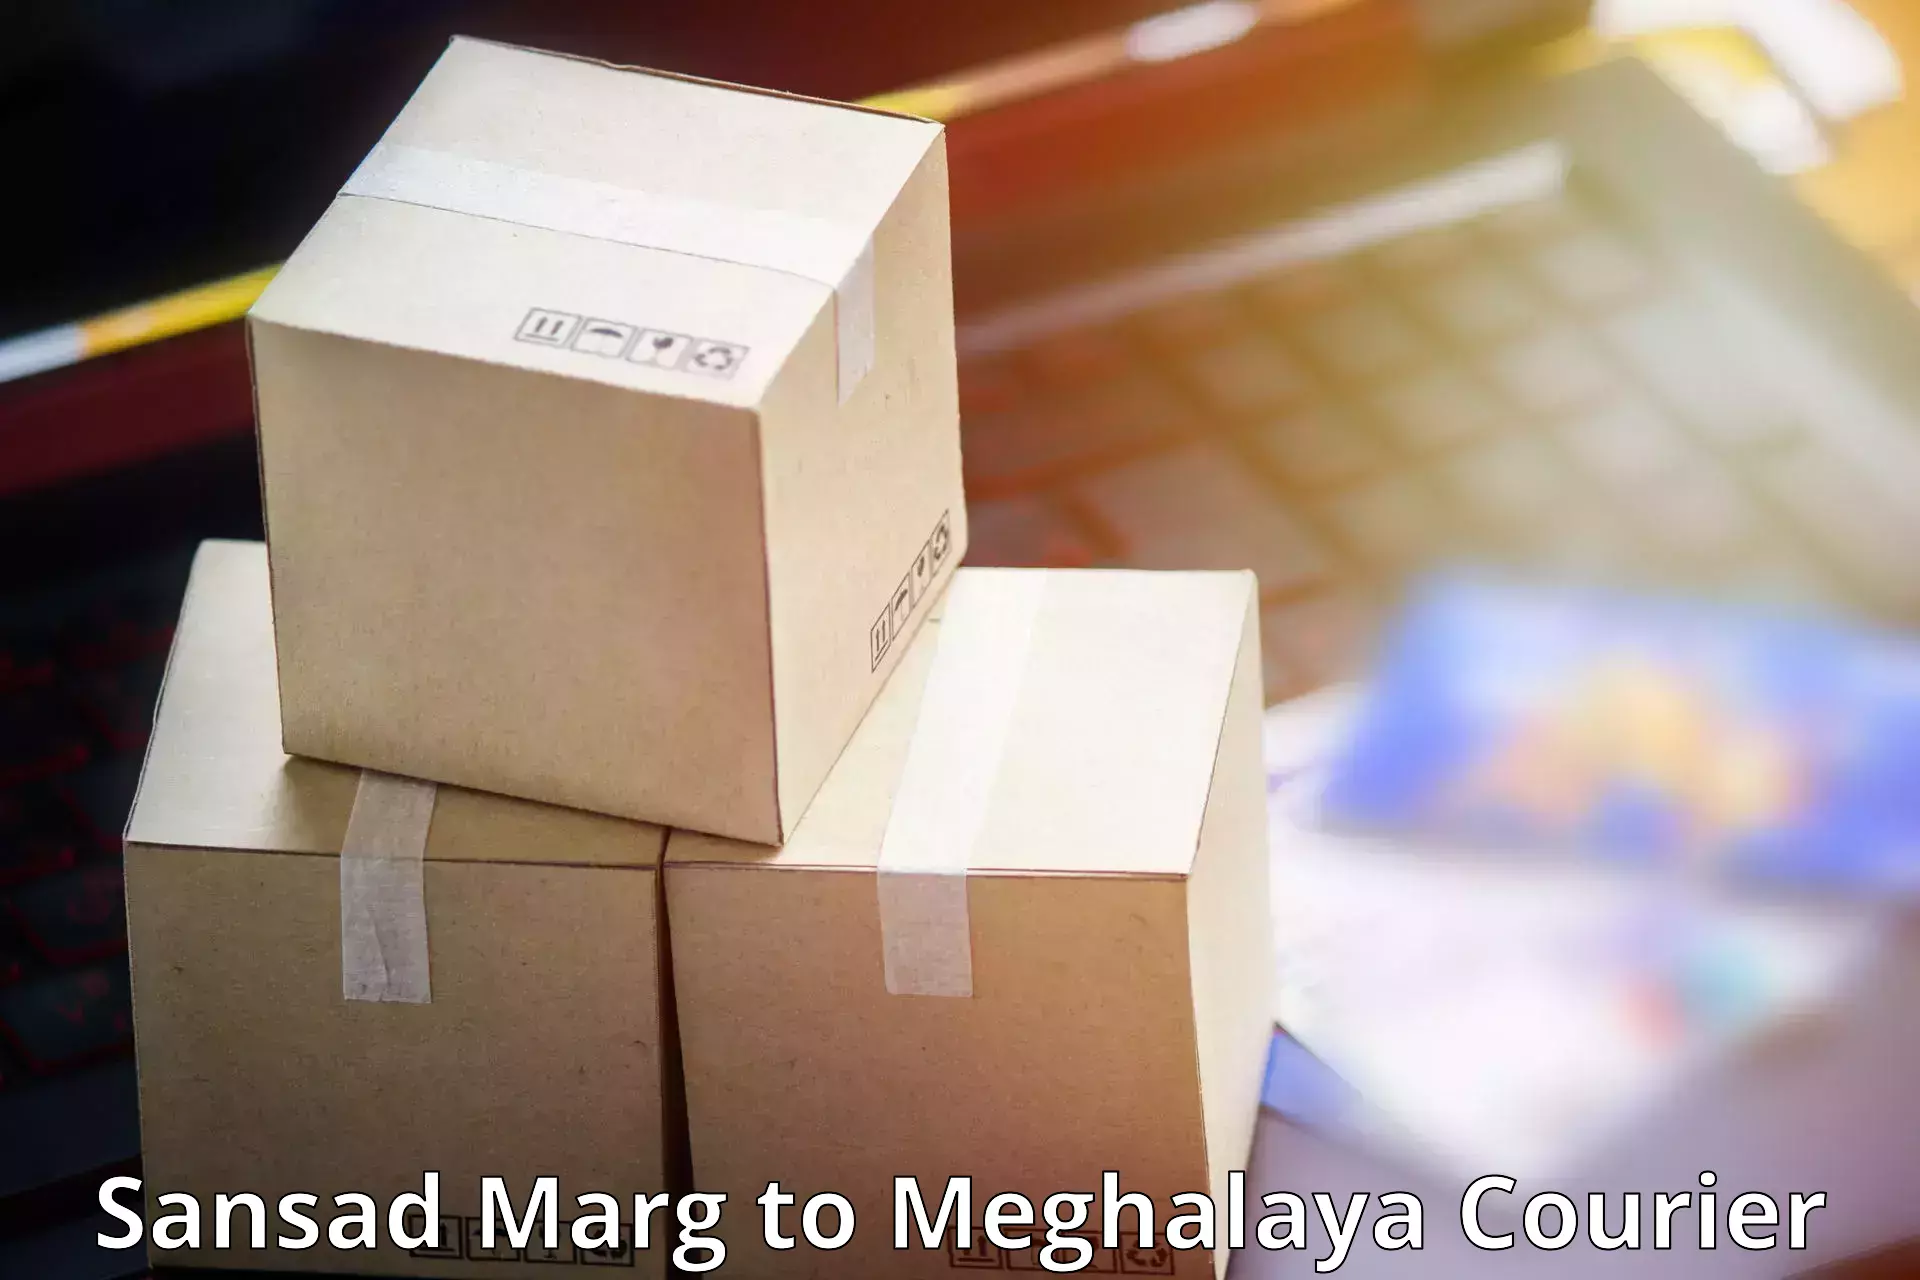 Global logistics network Sansad Marg to Meghalaya